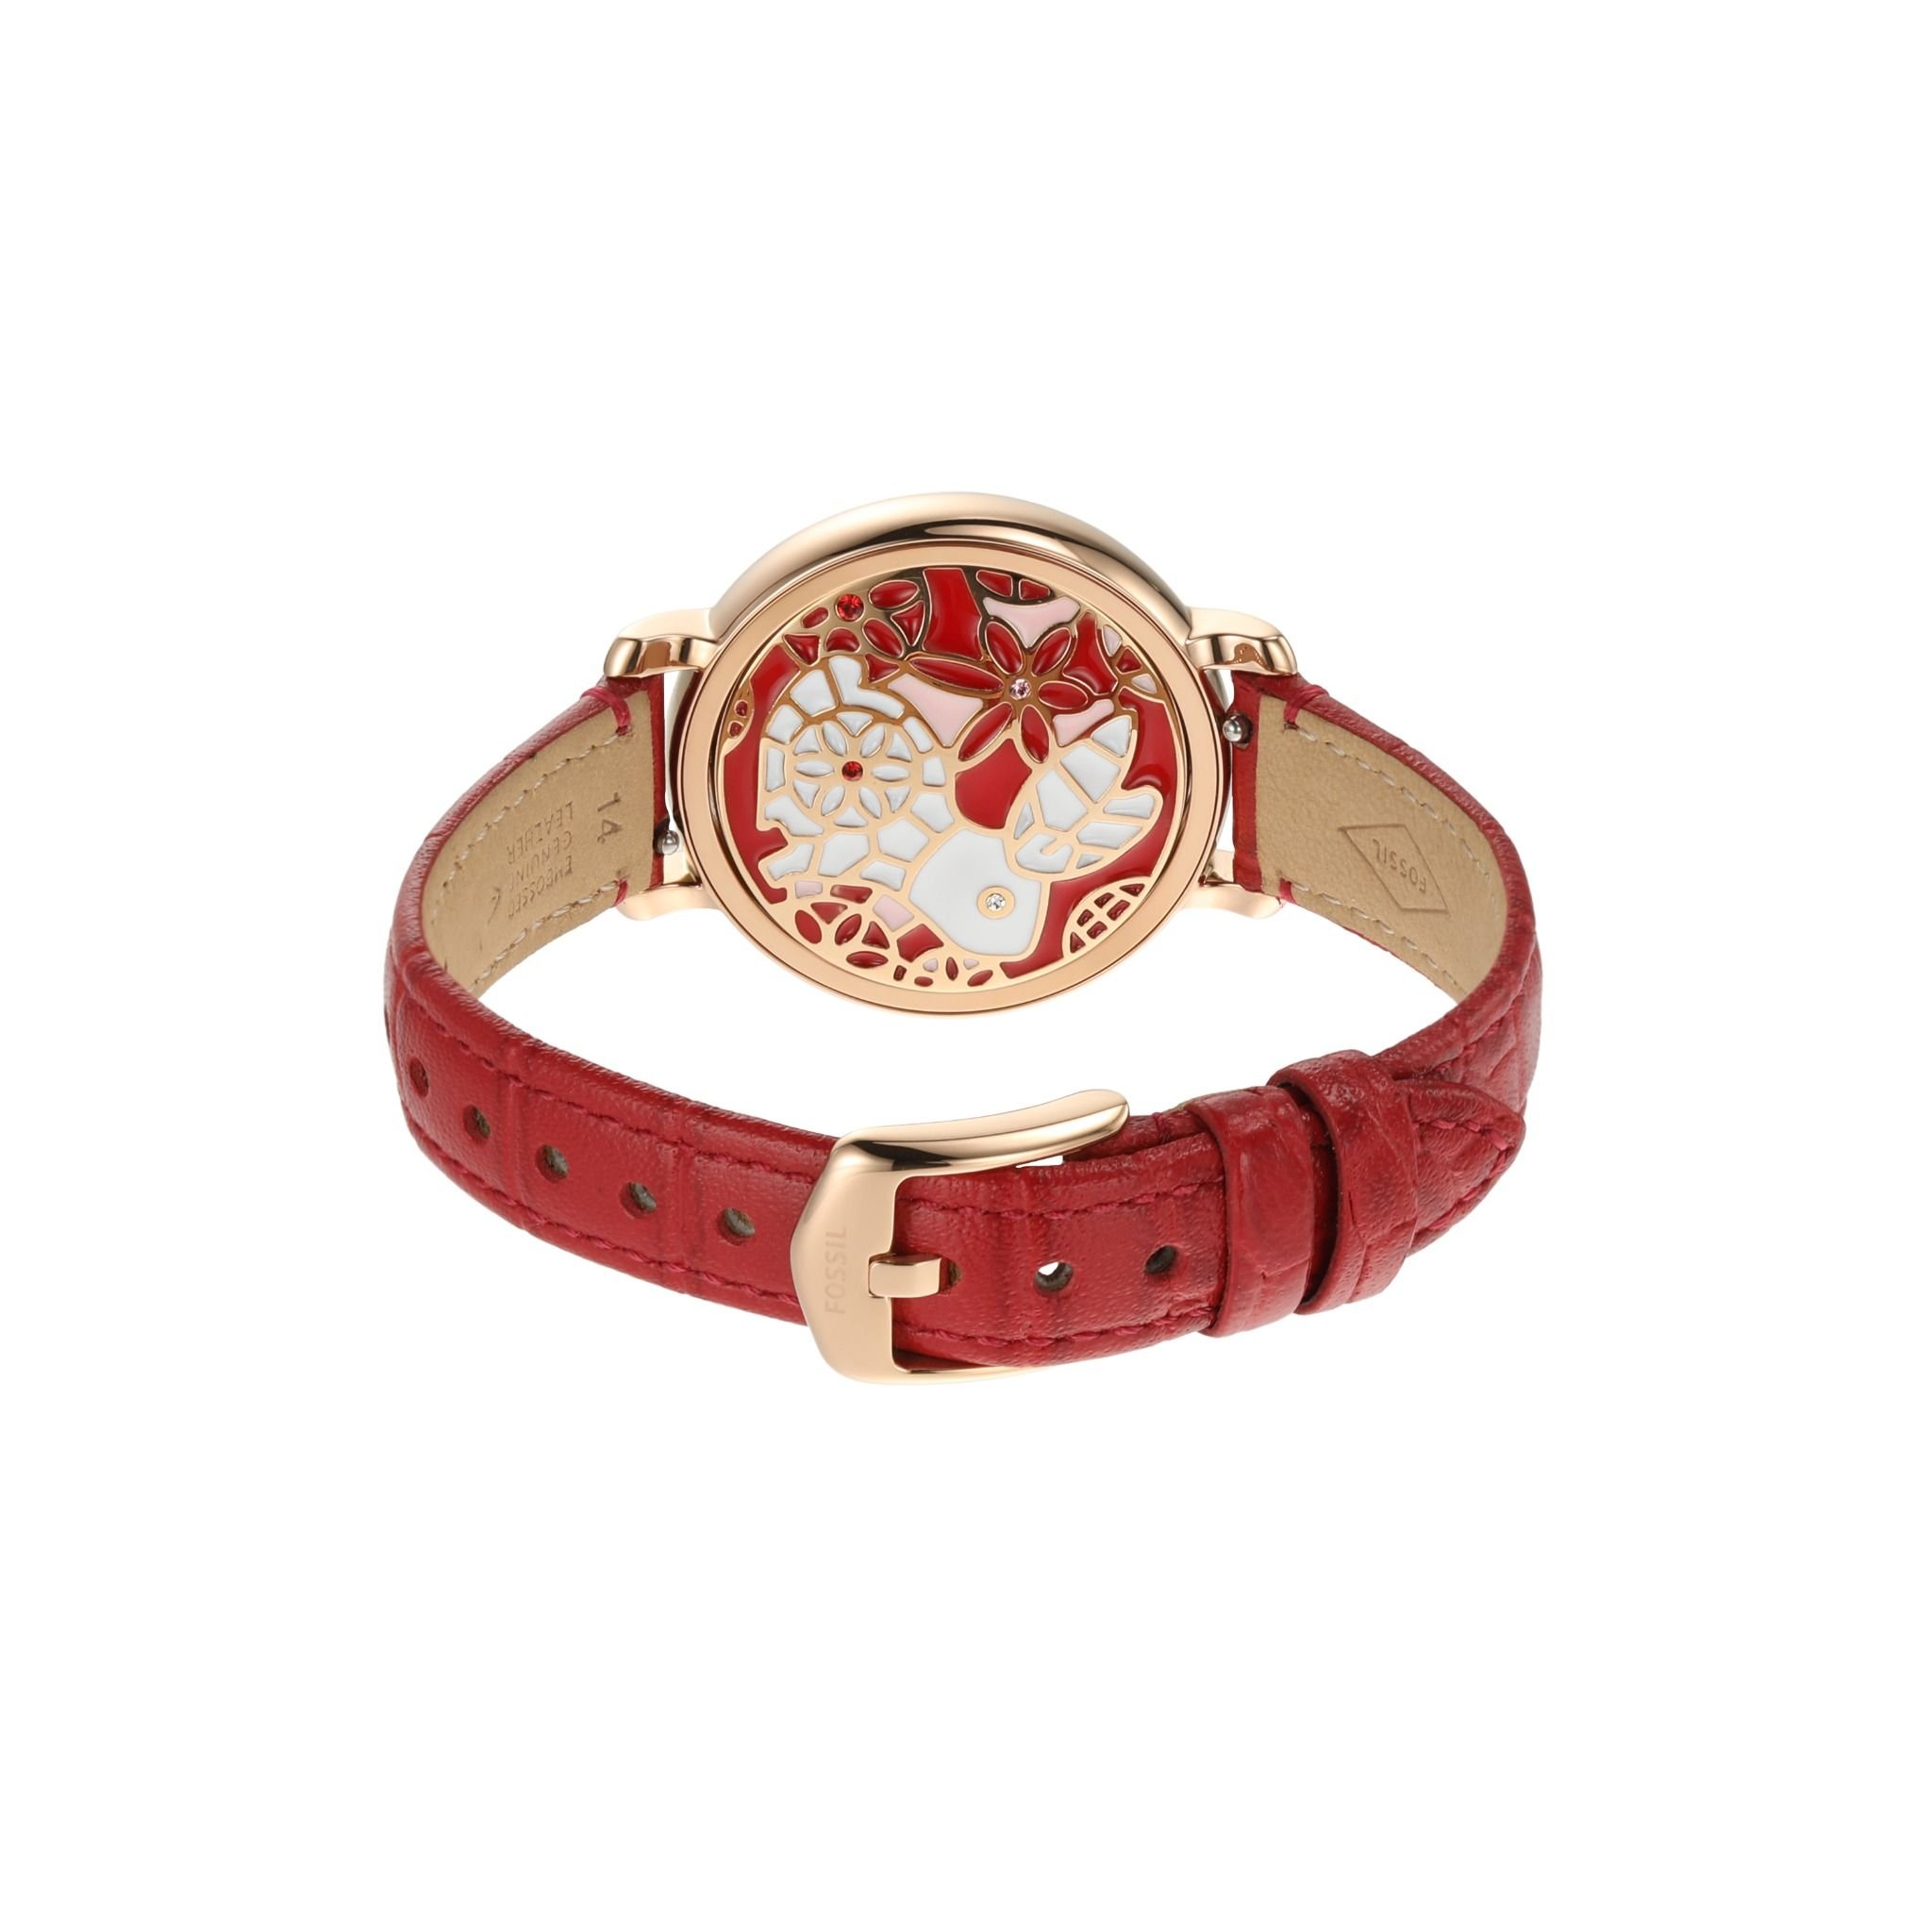  Đồng hồ Fossil nữ Jacqueline ES5248 dây da - màu đỏ 